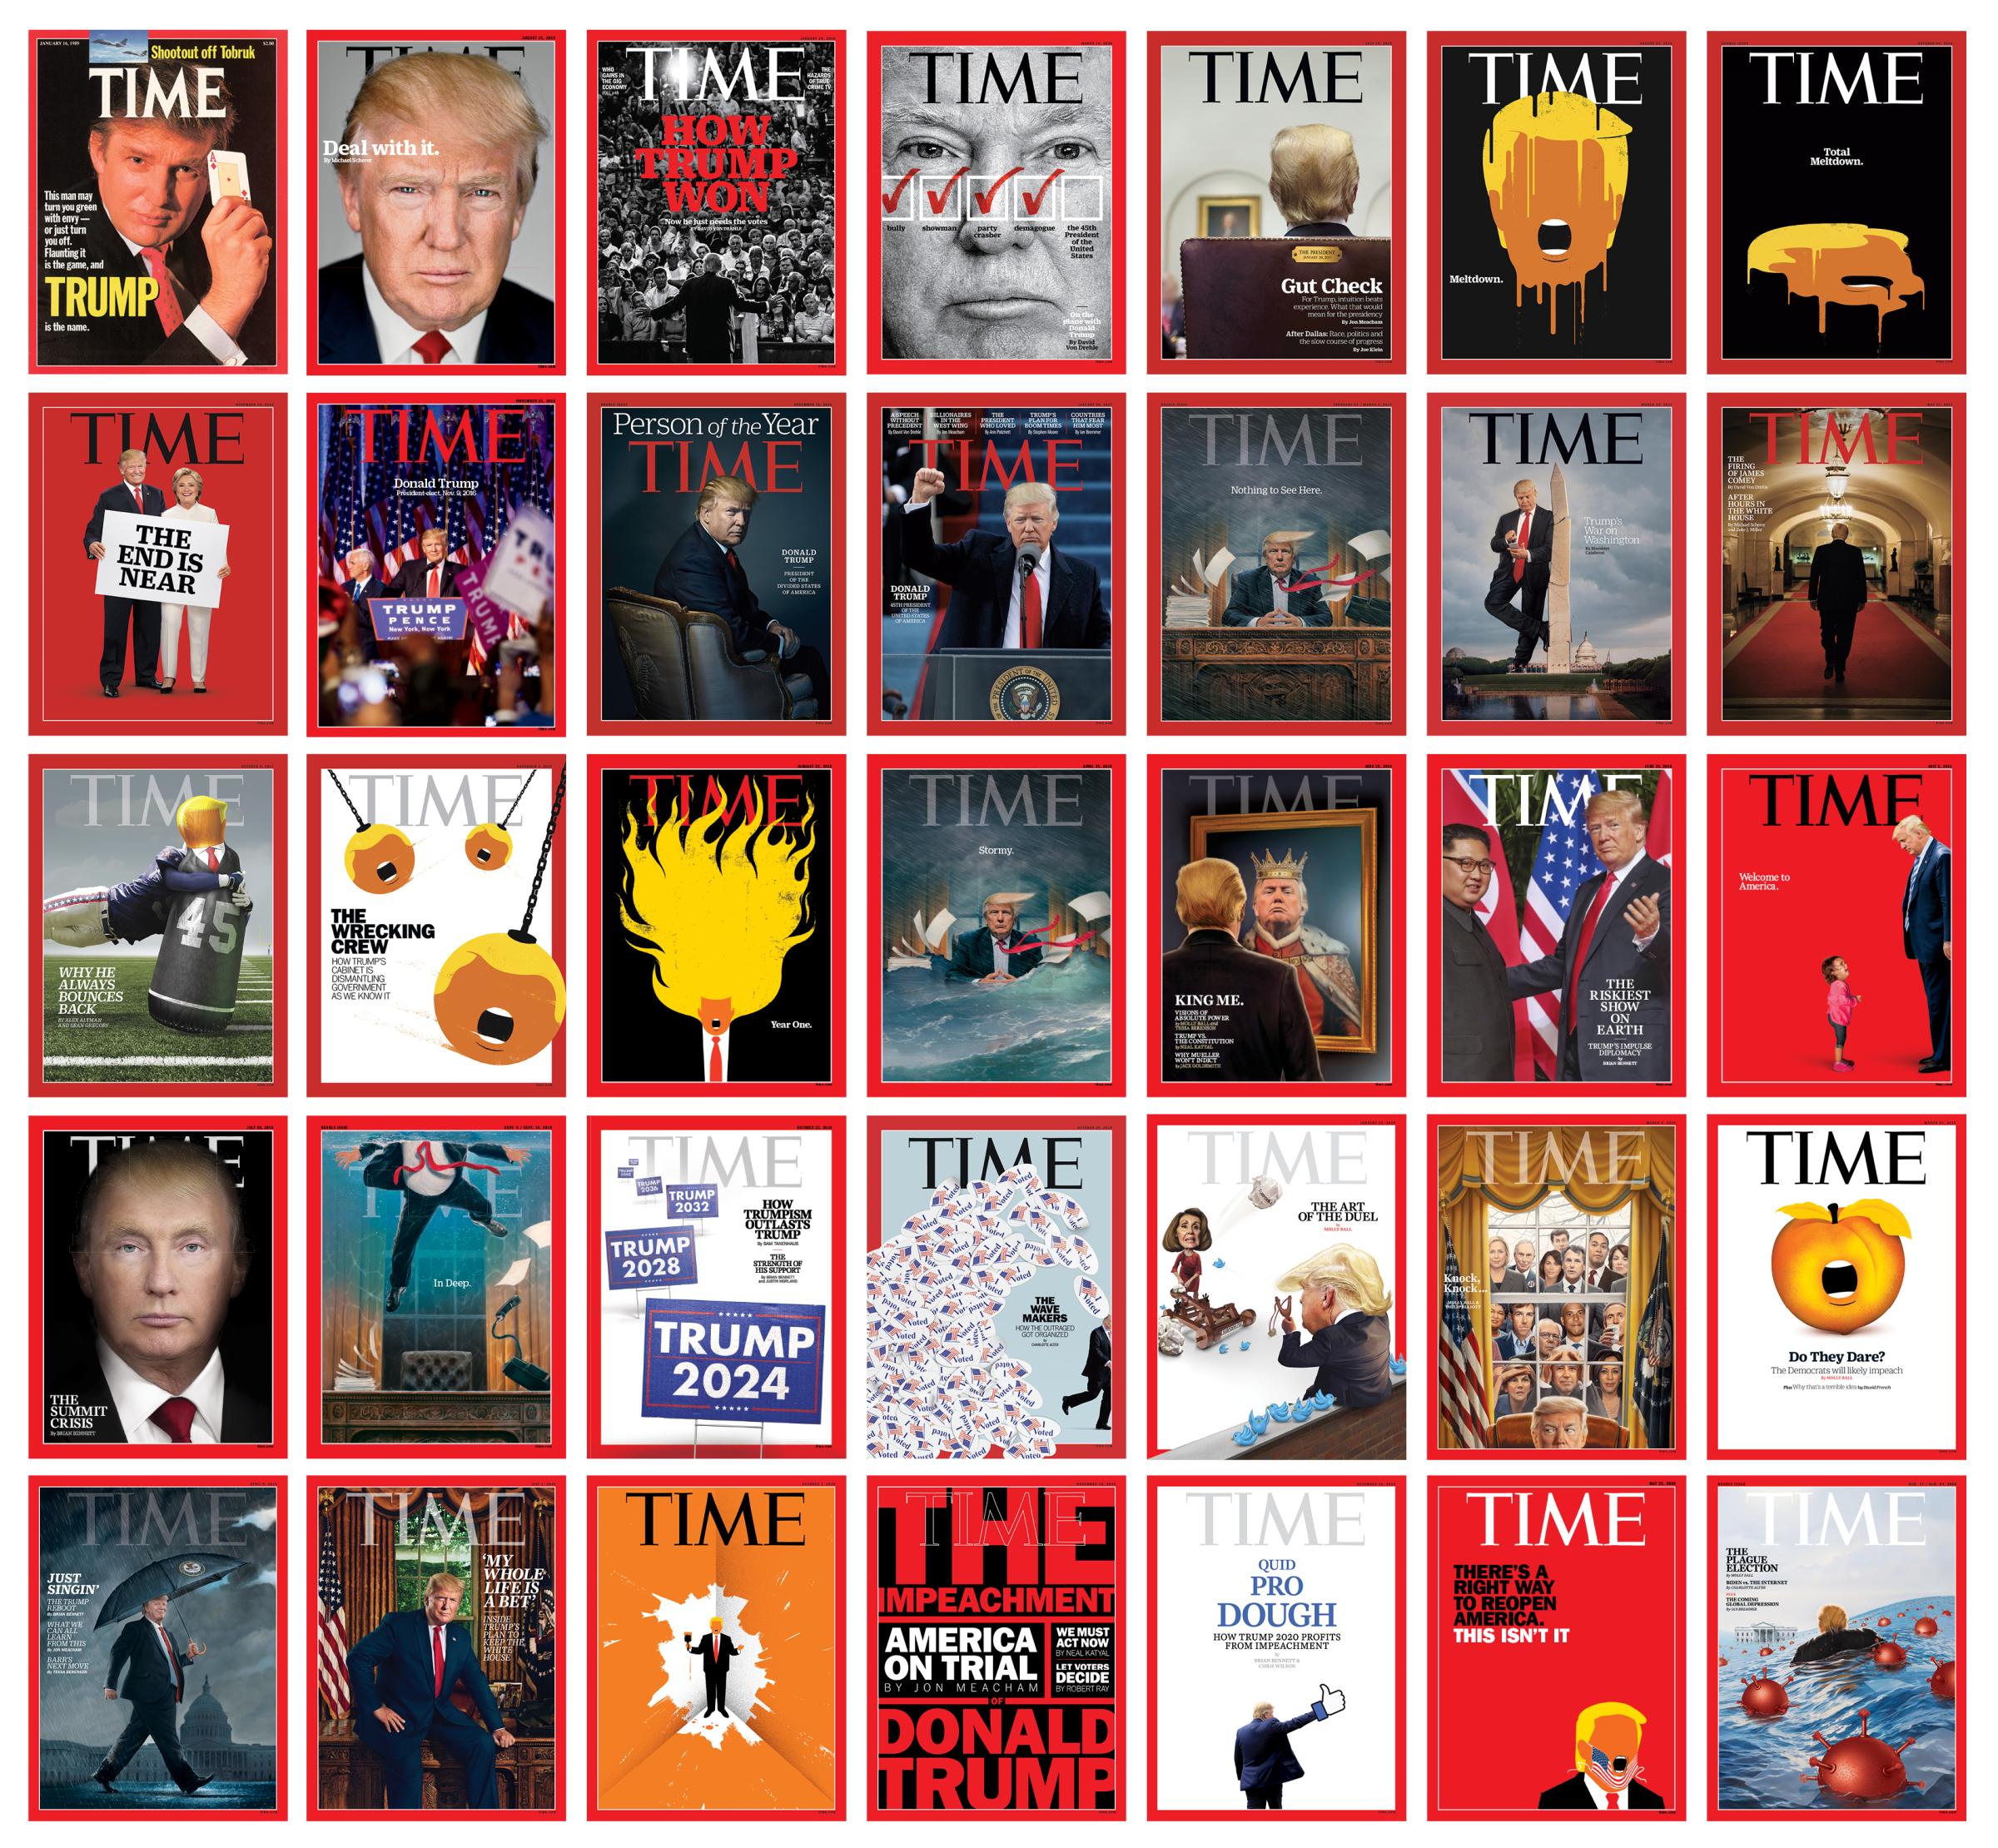 Donald Trump Time Magazine covers